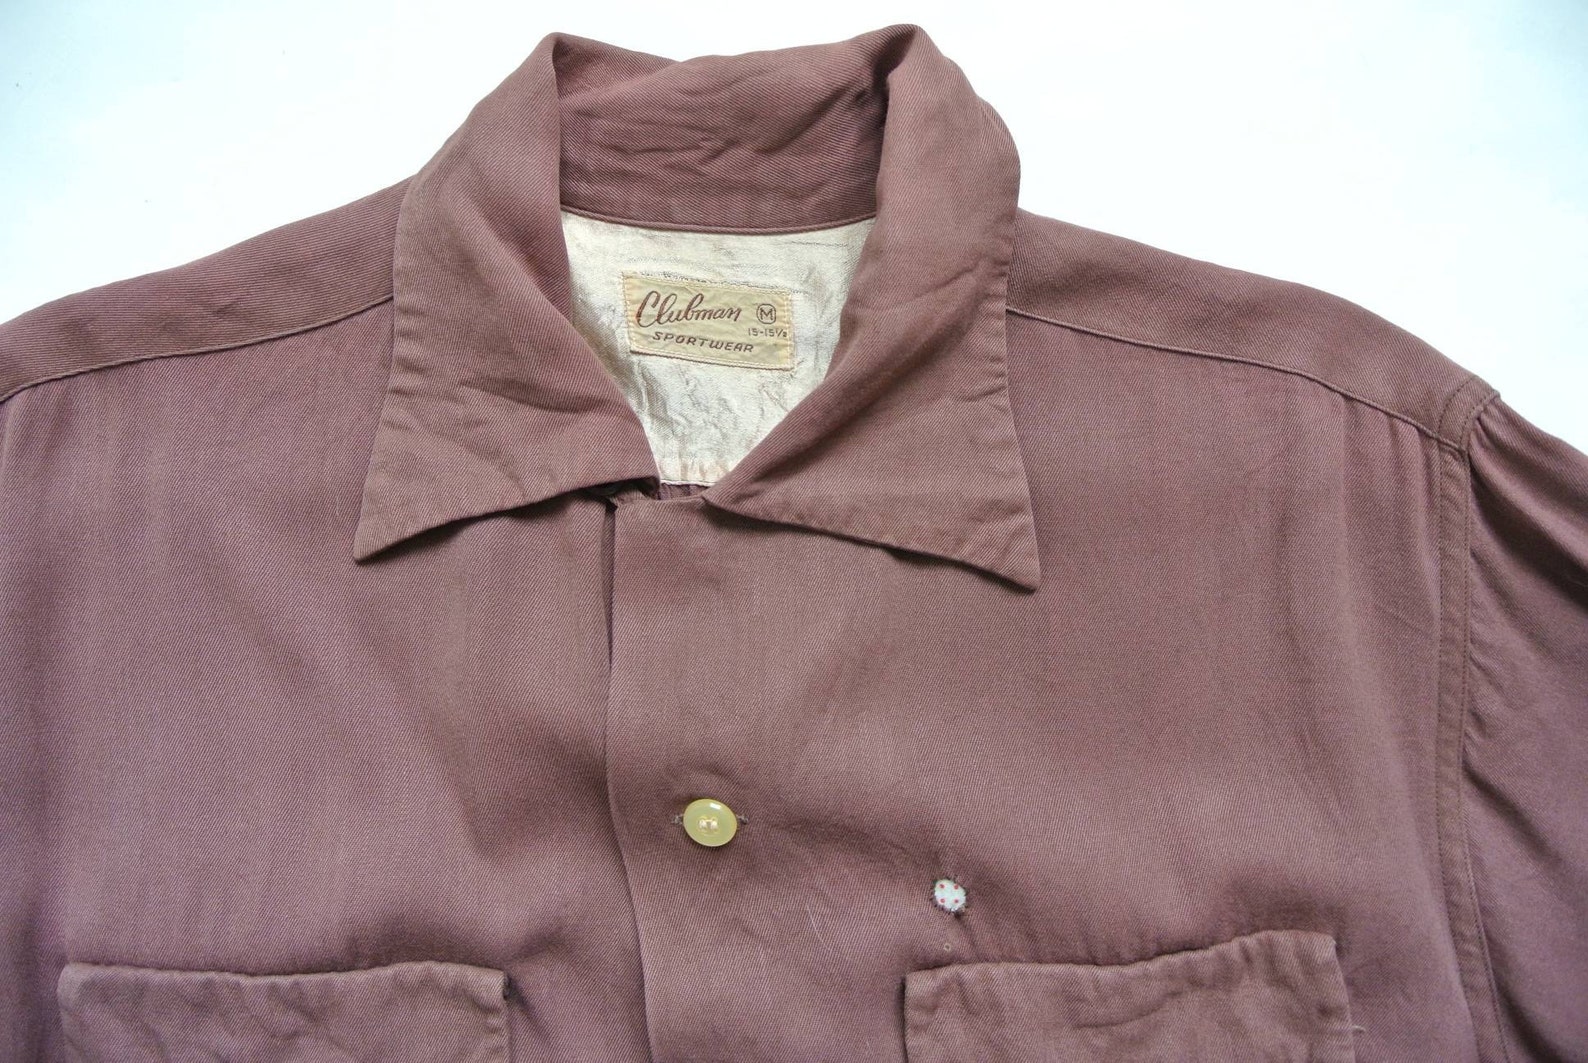 Vintage 1950s rayon open collar shirt | Etsy